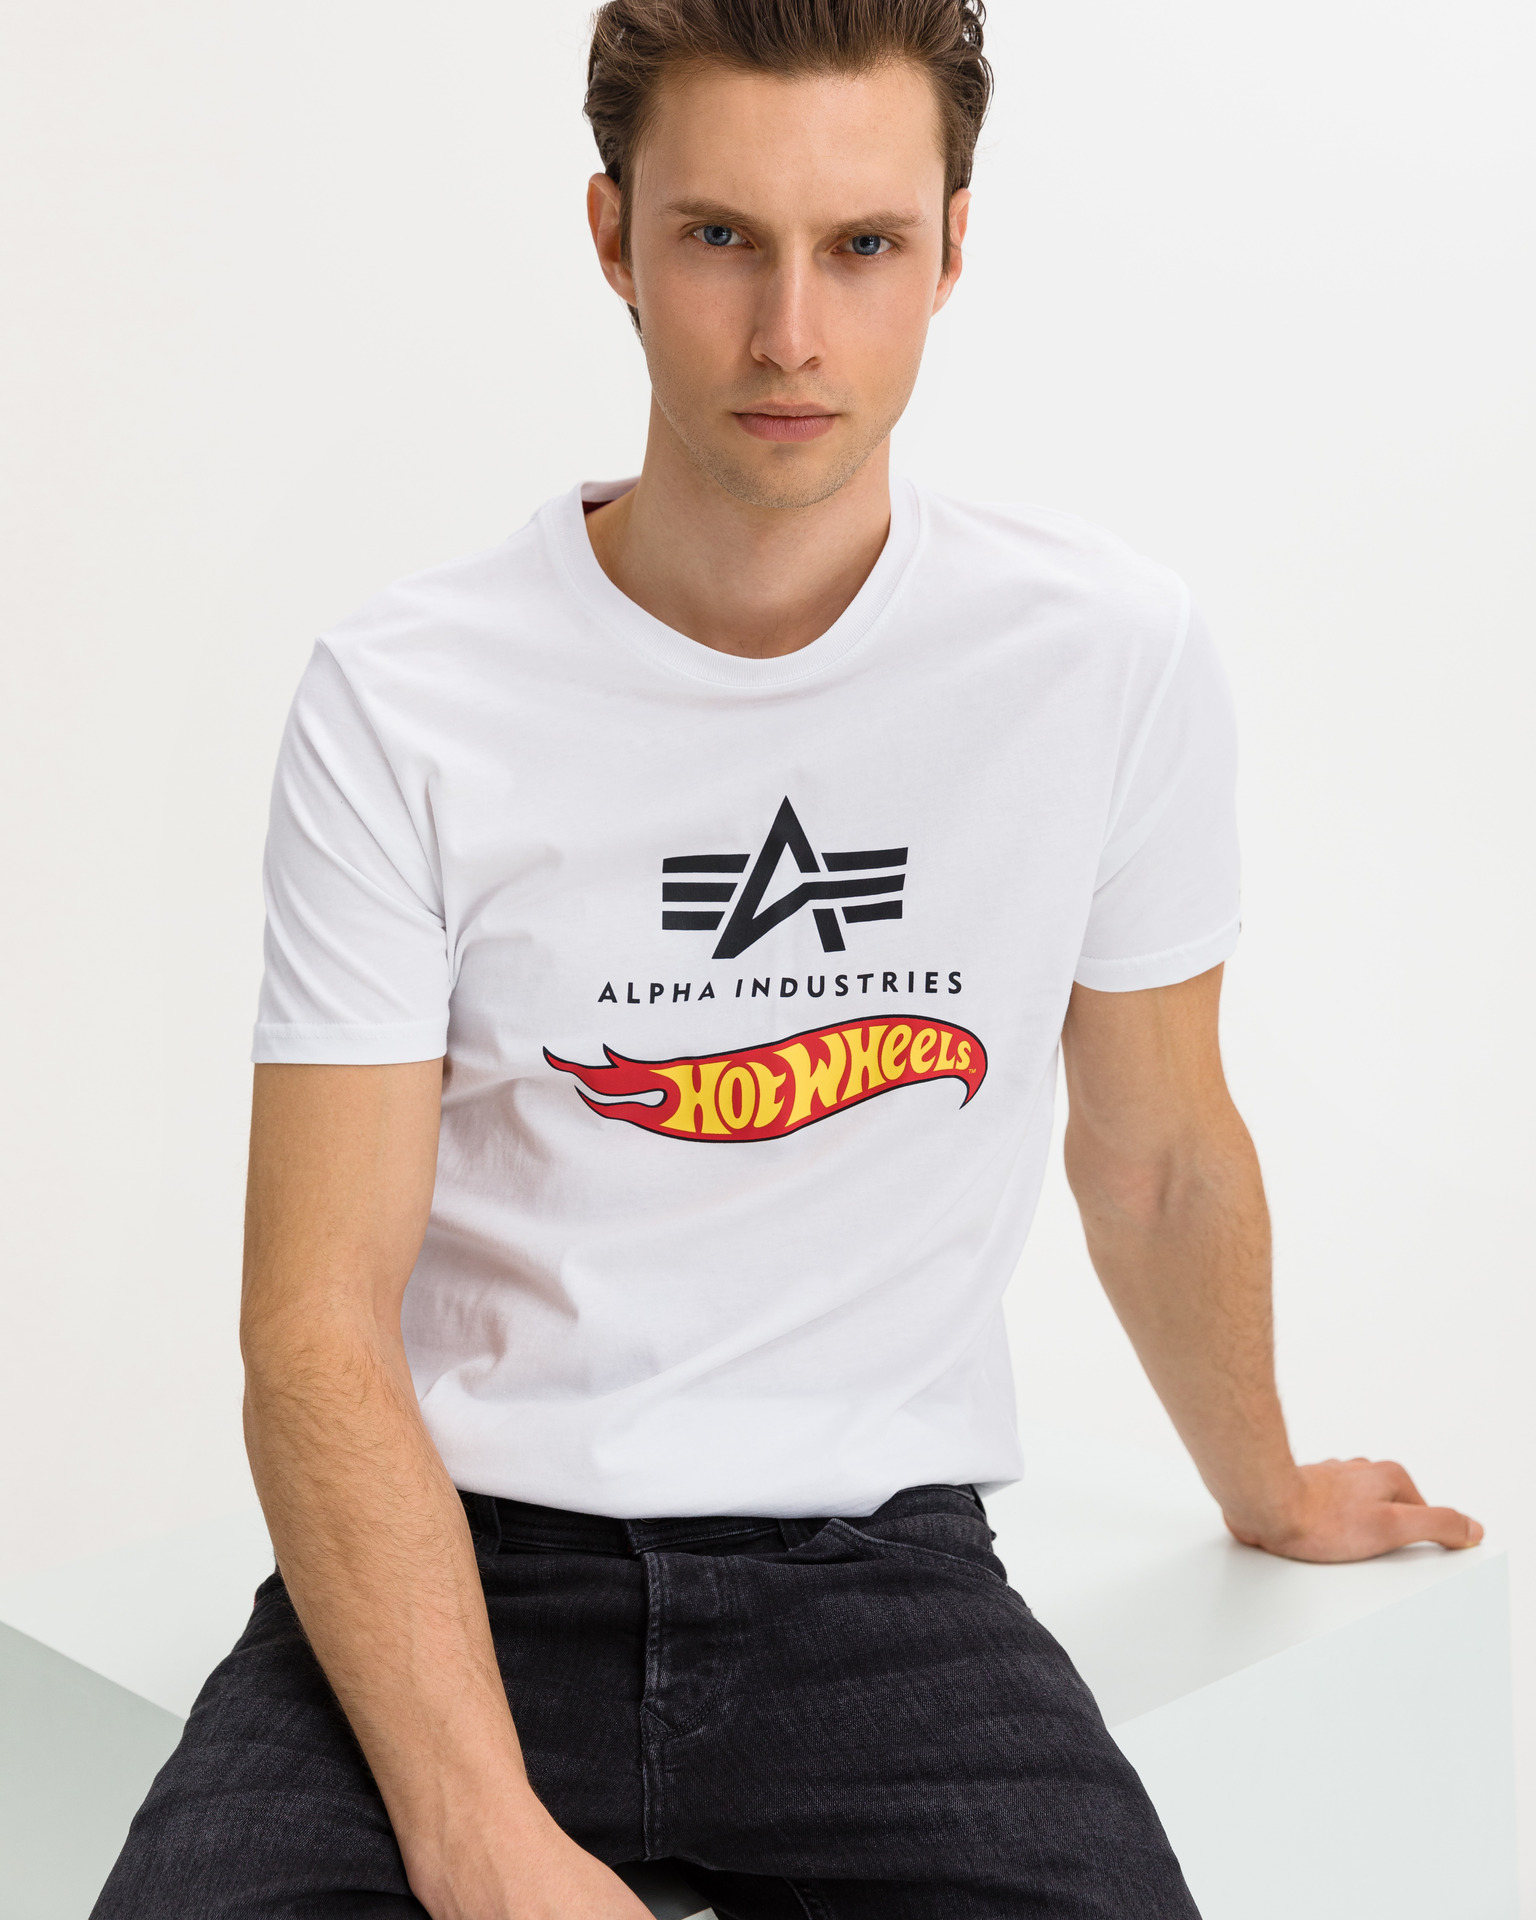 Wheels Hot Flag Alpha - Industries T-shirt